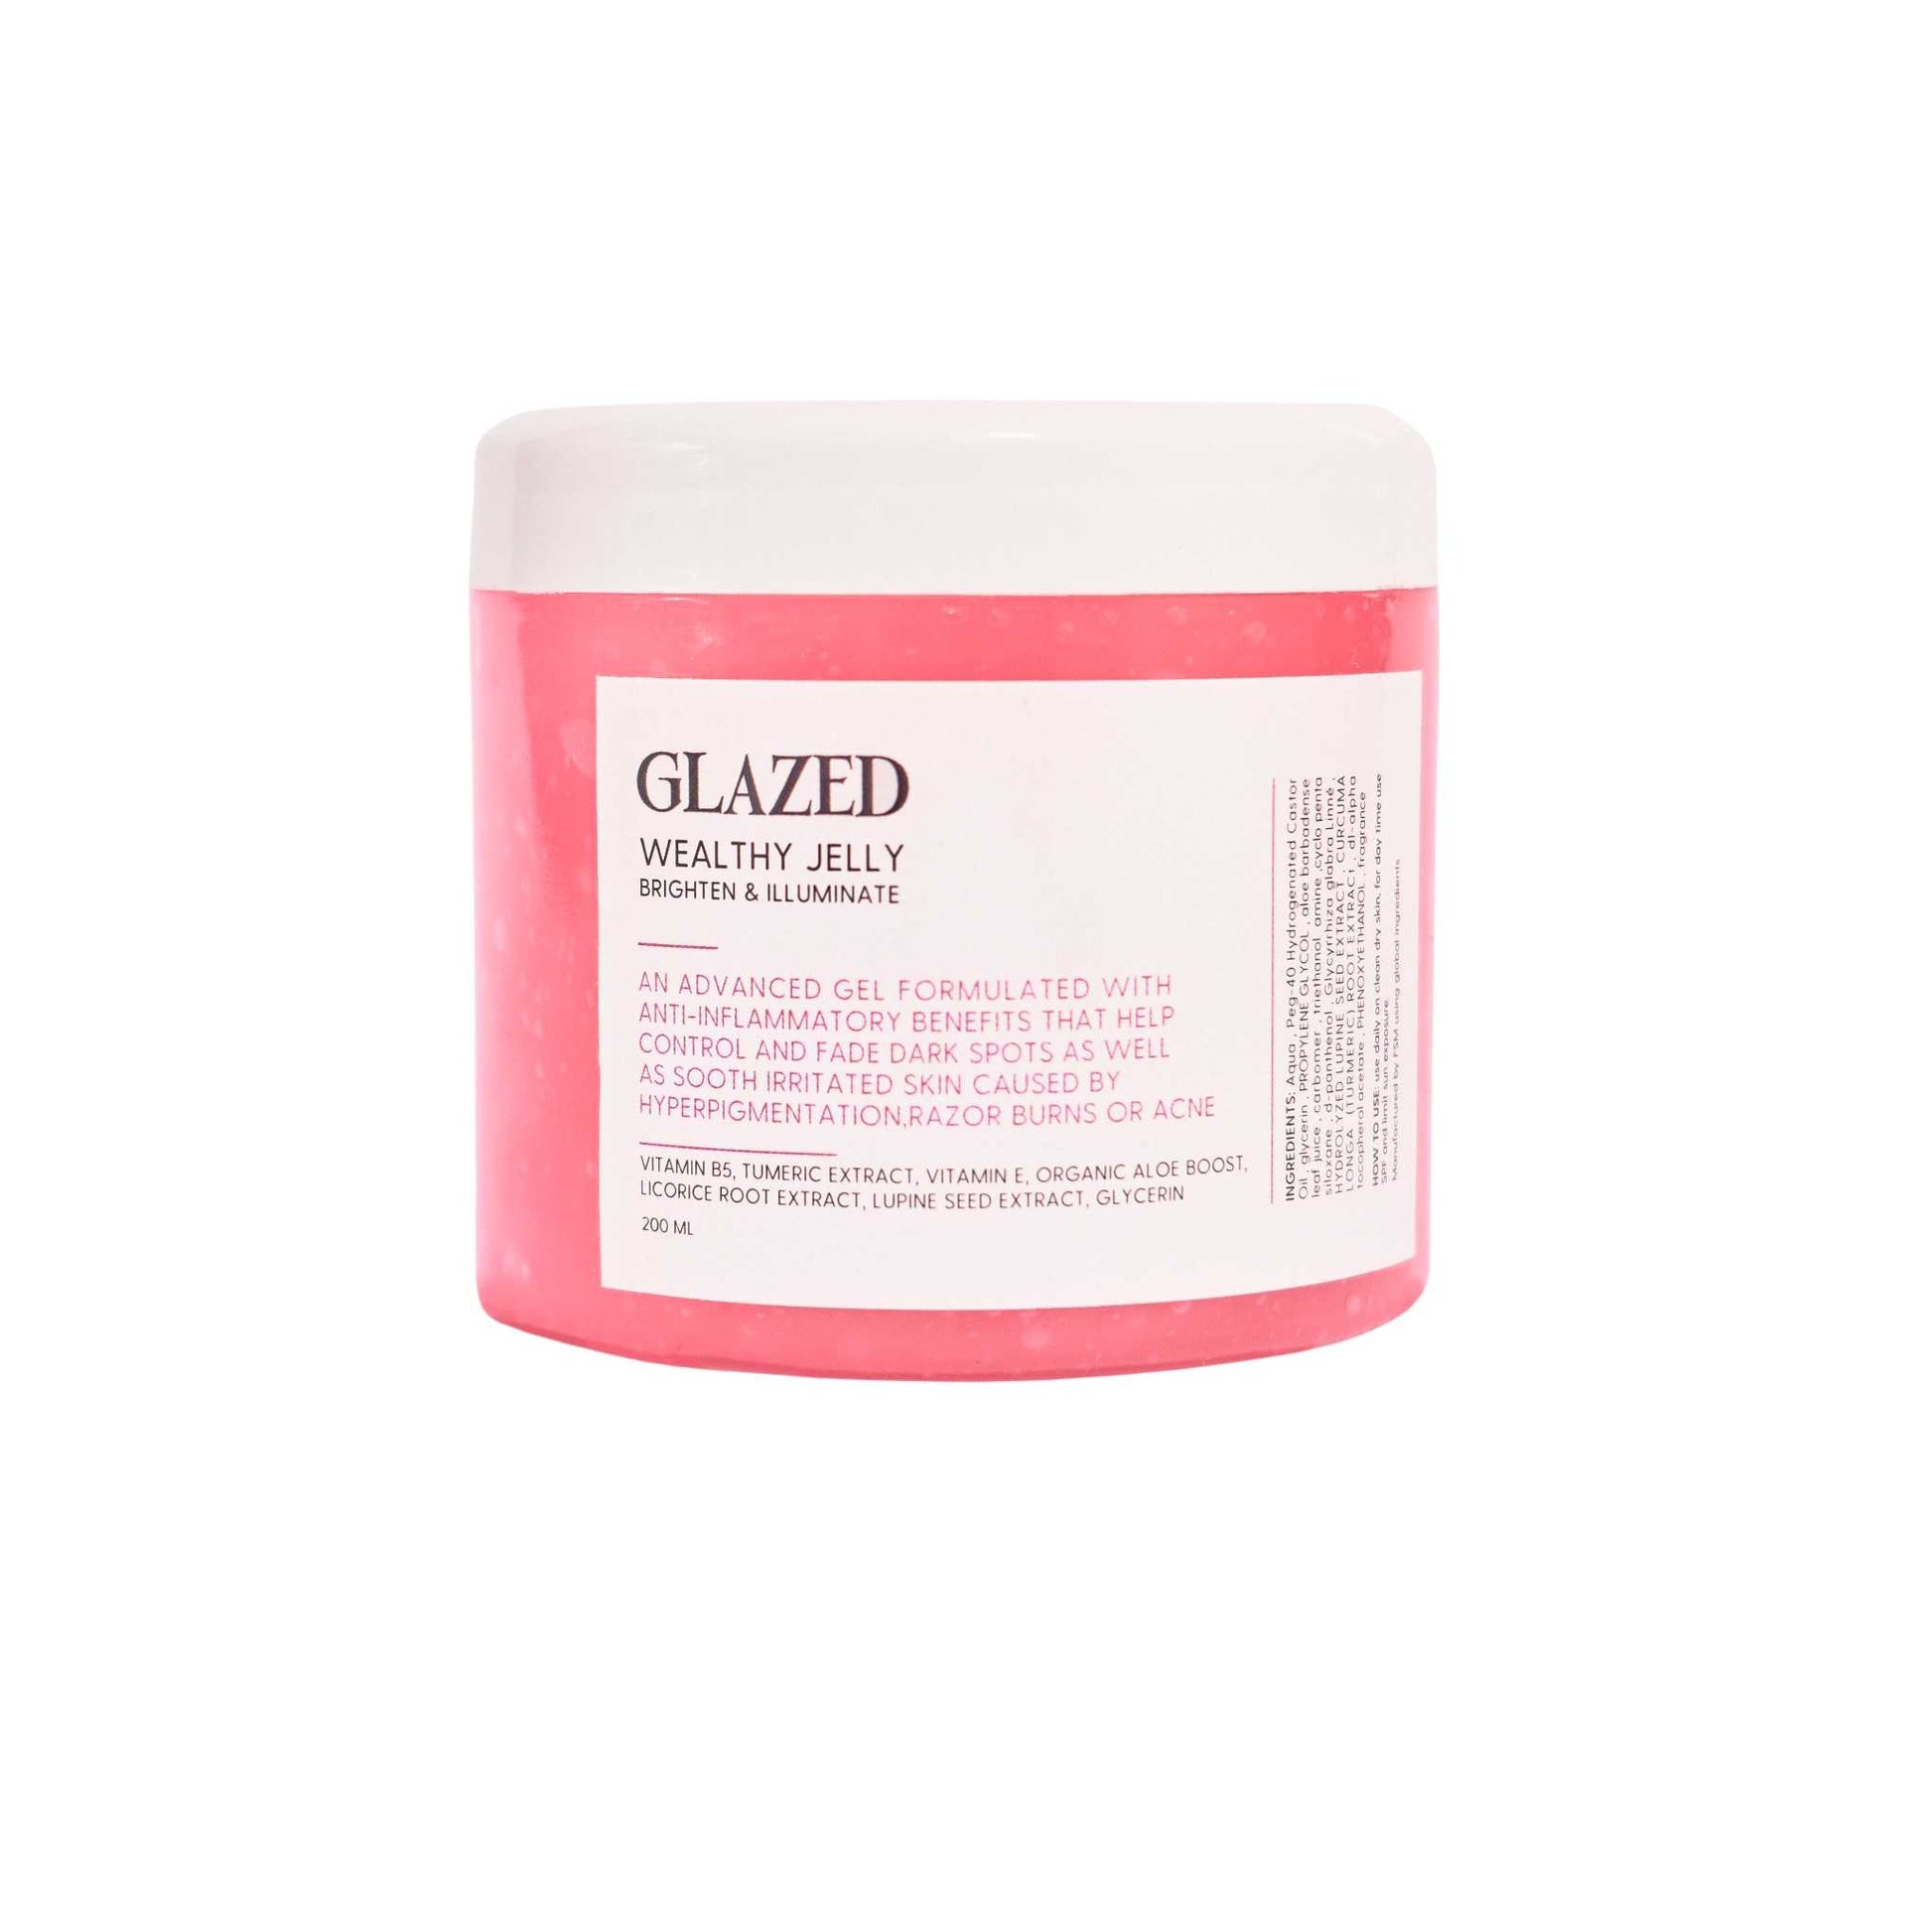 GLAZED Wealthy Jelly-Brighten & Illuminate 200ML- EXCLUSIVE Glazed